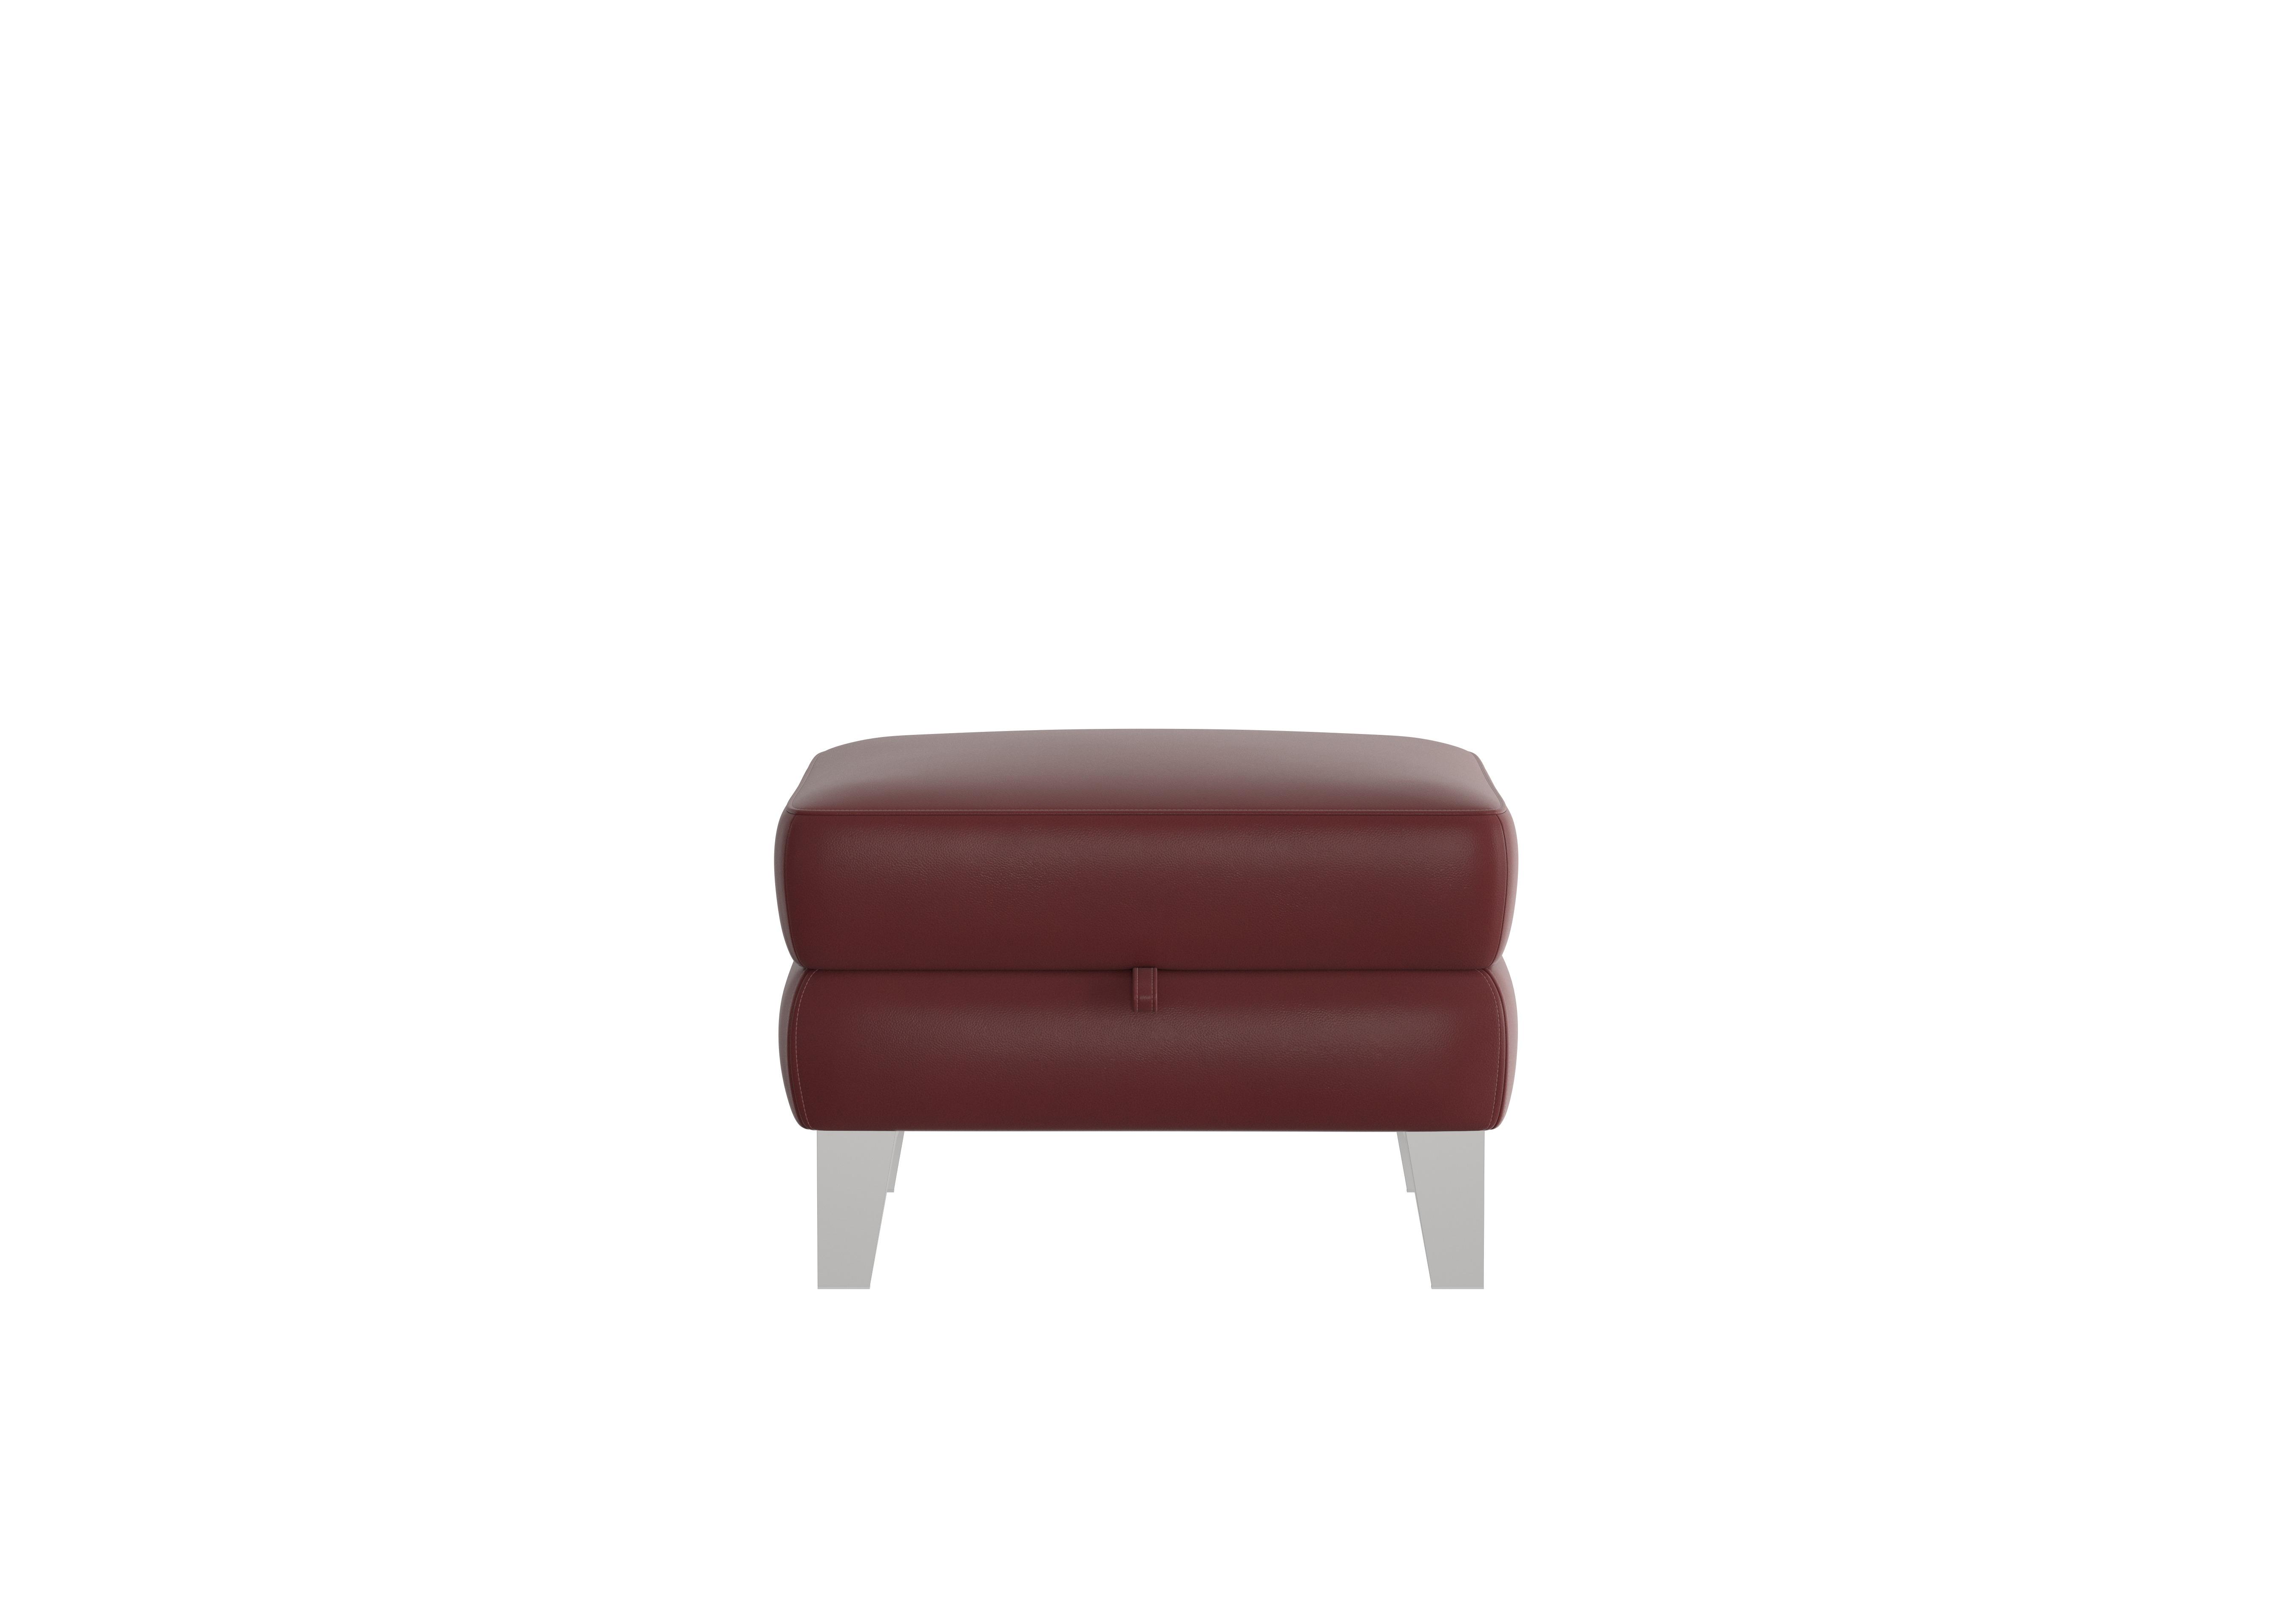 Amarilla Leather Storage Footstool in Bv-035c Deep Red on Furniture Village